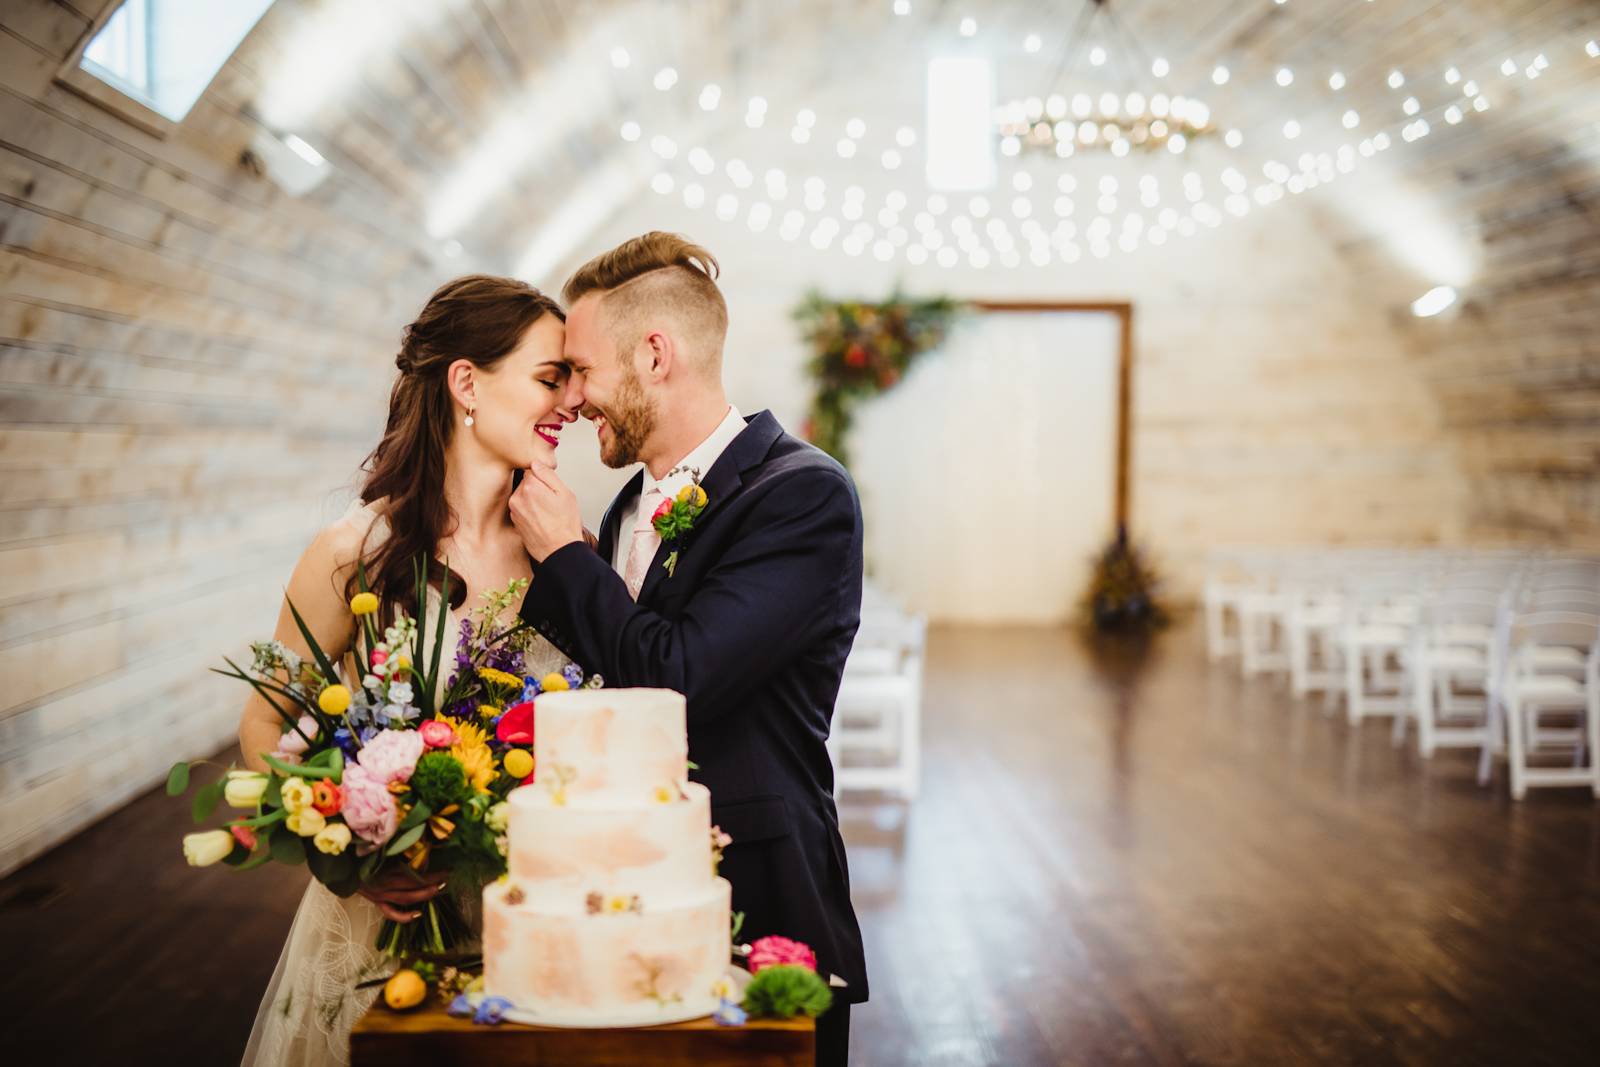 Vibrant Cake and Wedding